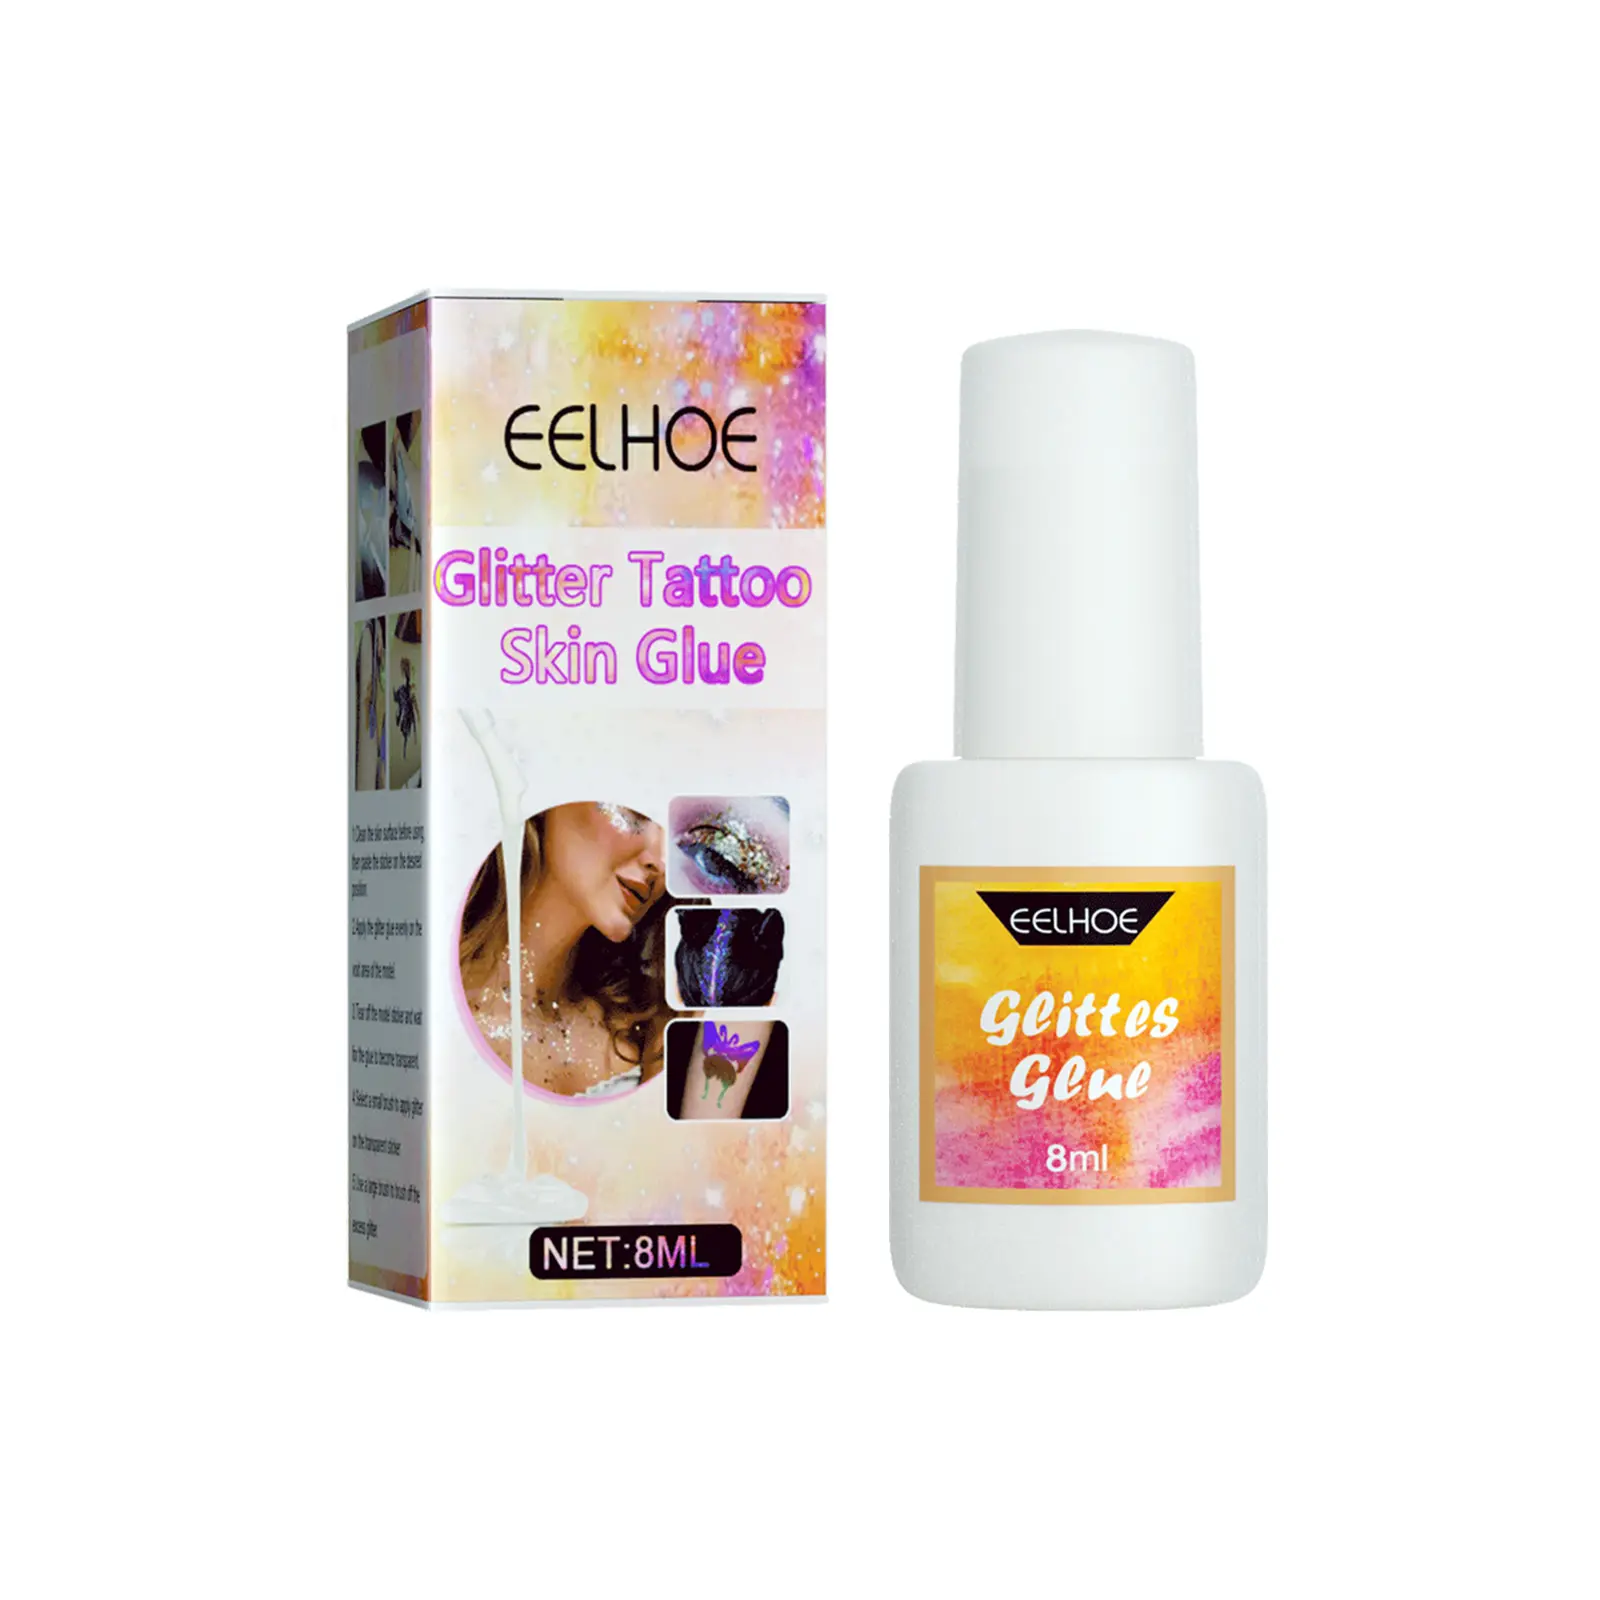 EELHOE Flash Tattoo Skin Glue Face Body Skin Flash Tattoo Eye Makeup Painted Tattoo Skin Glue K1